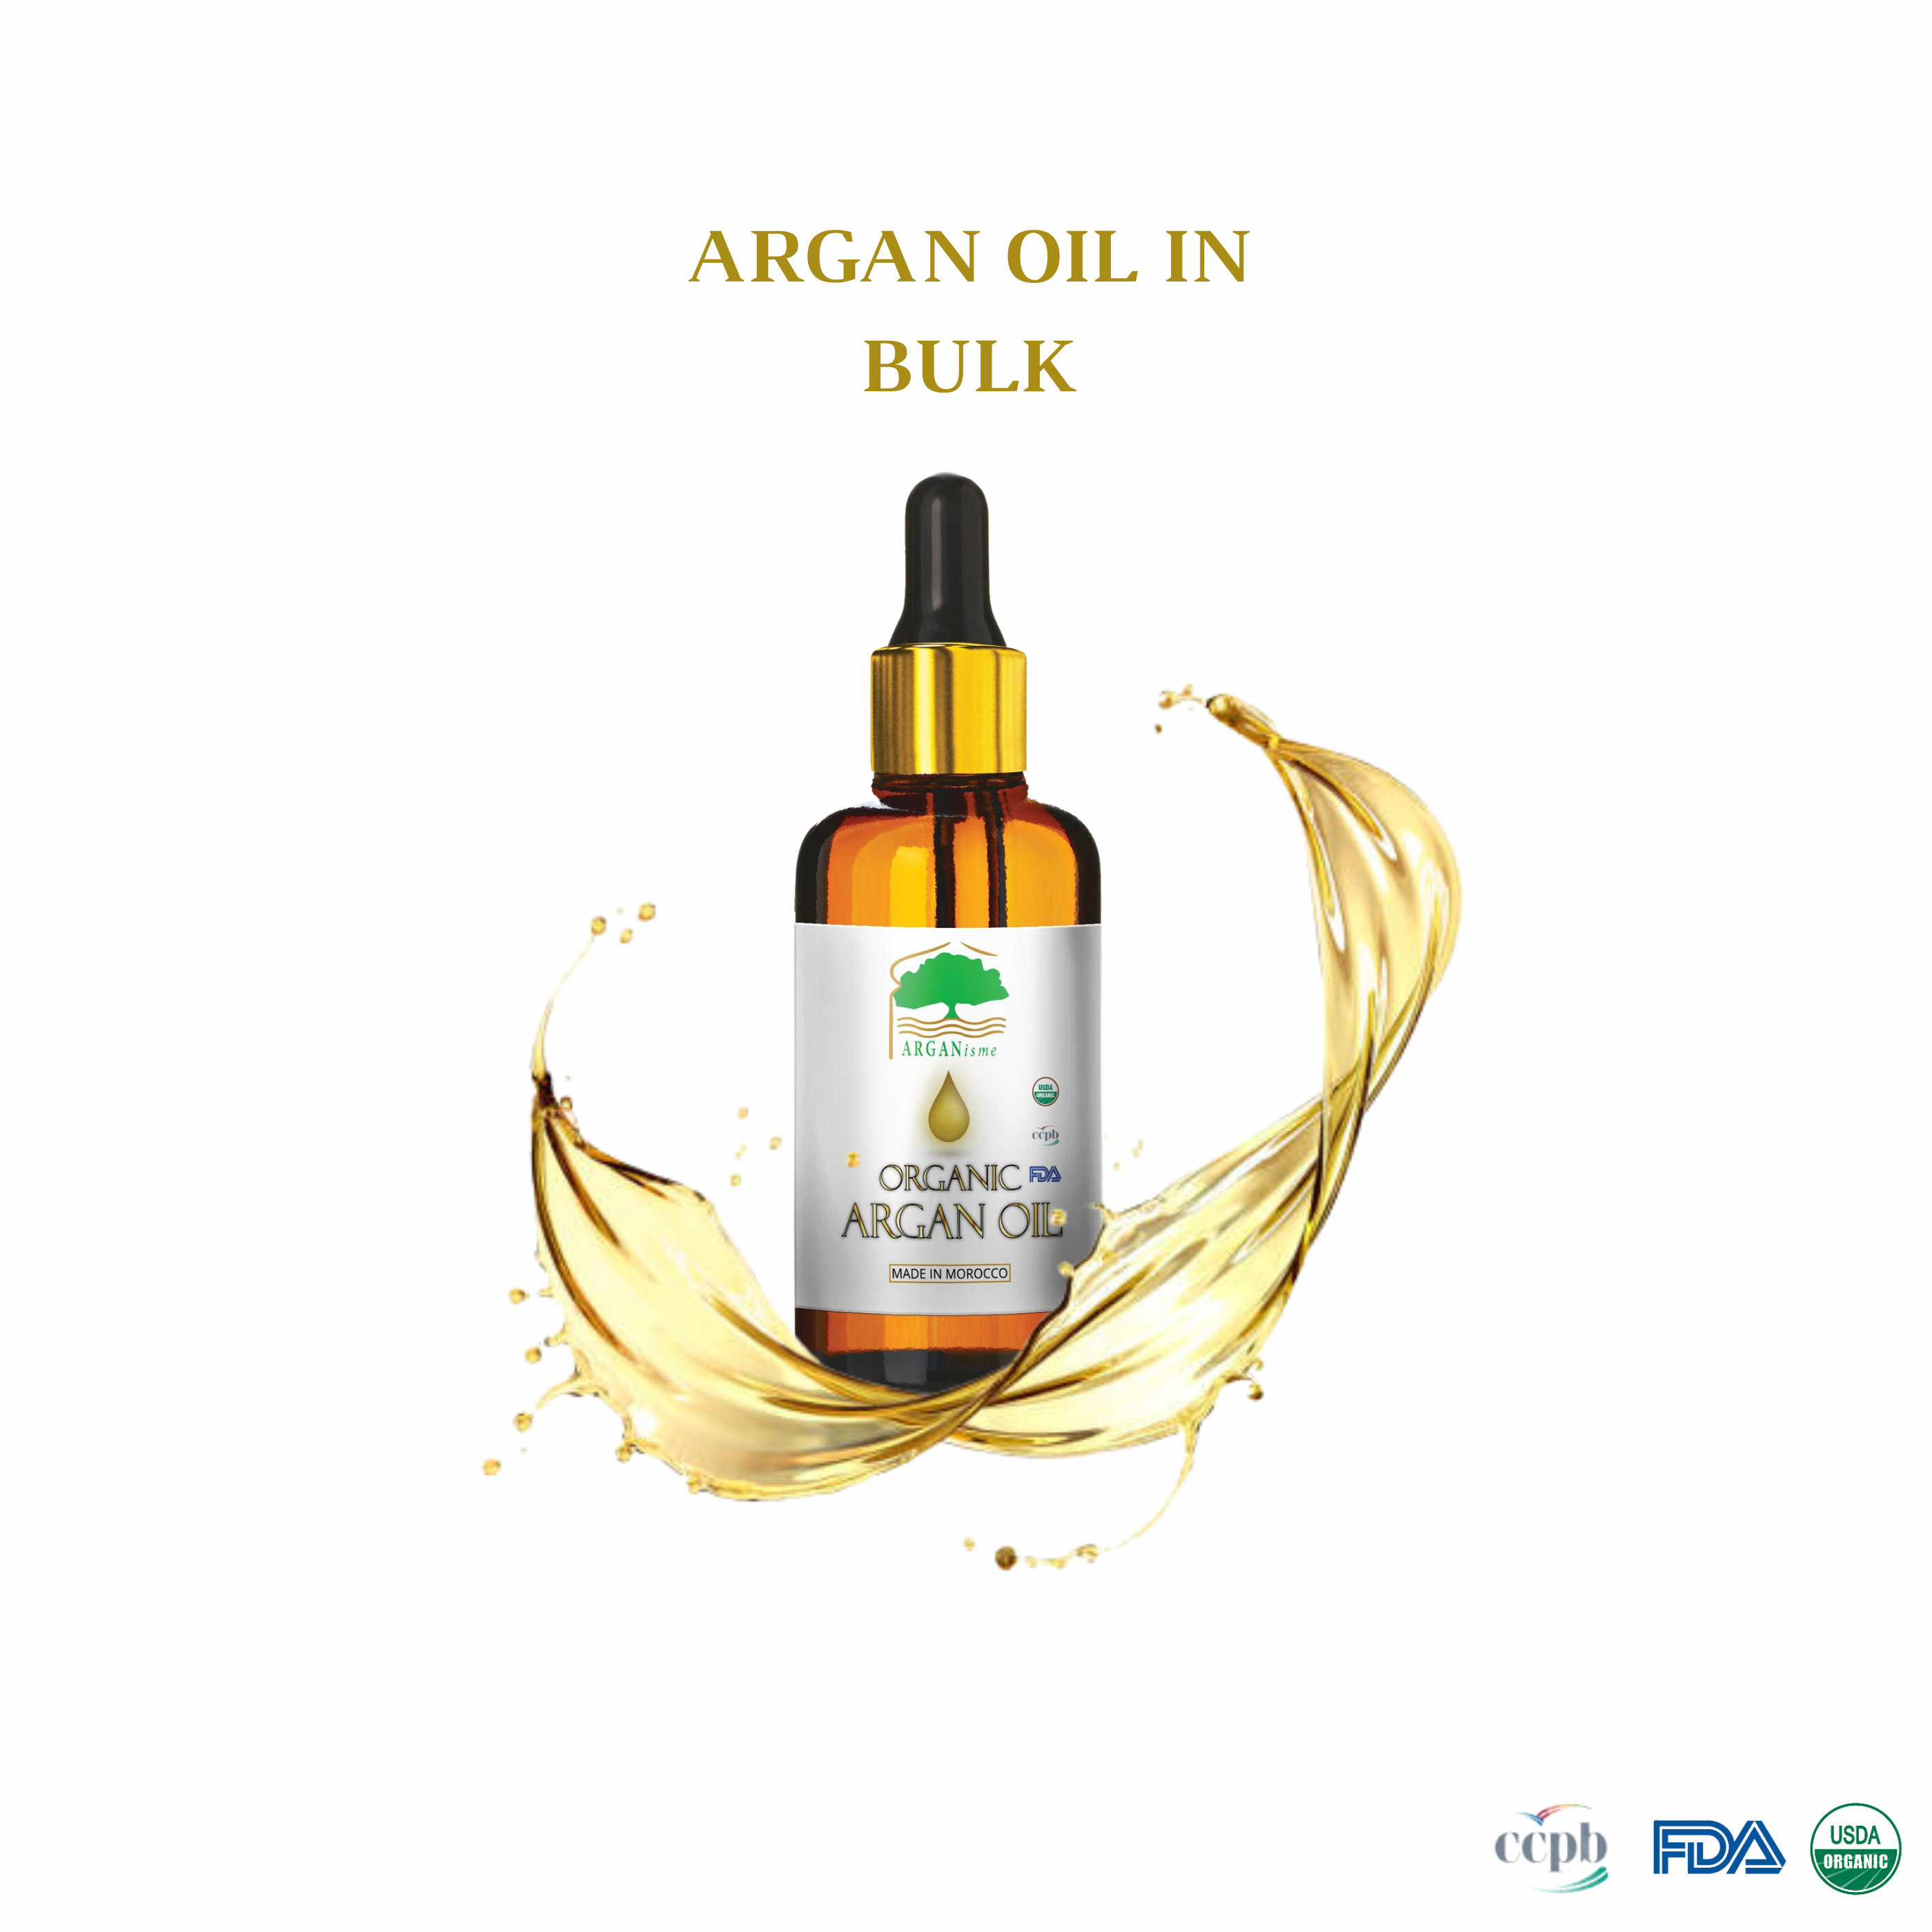 ARGAN OIL PRODUCERS : 